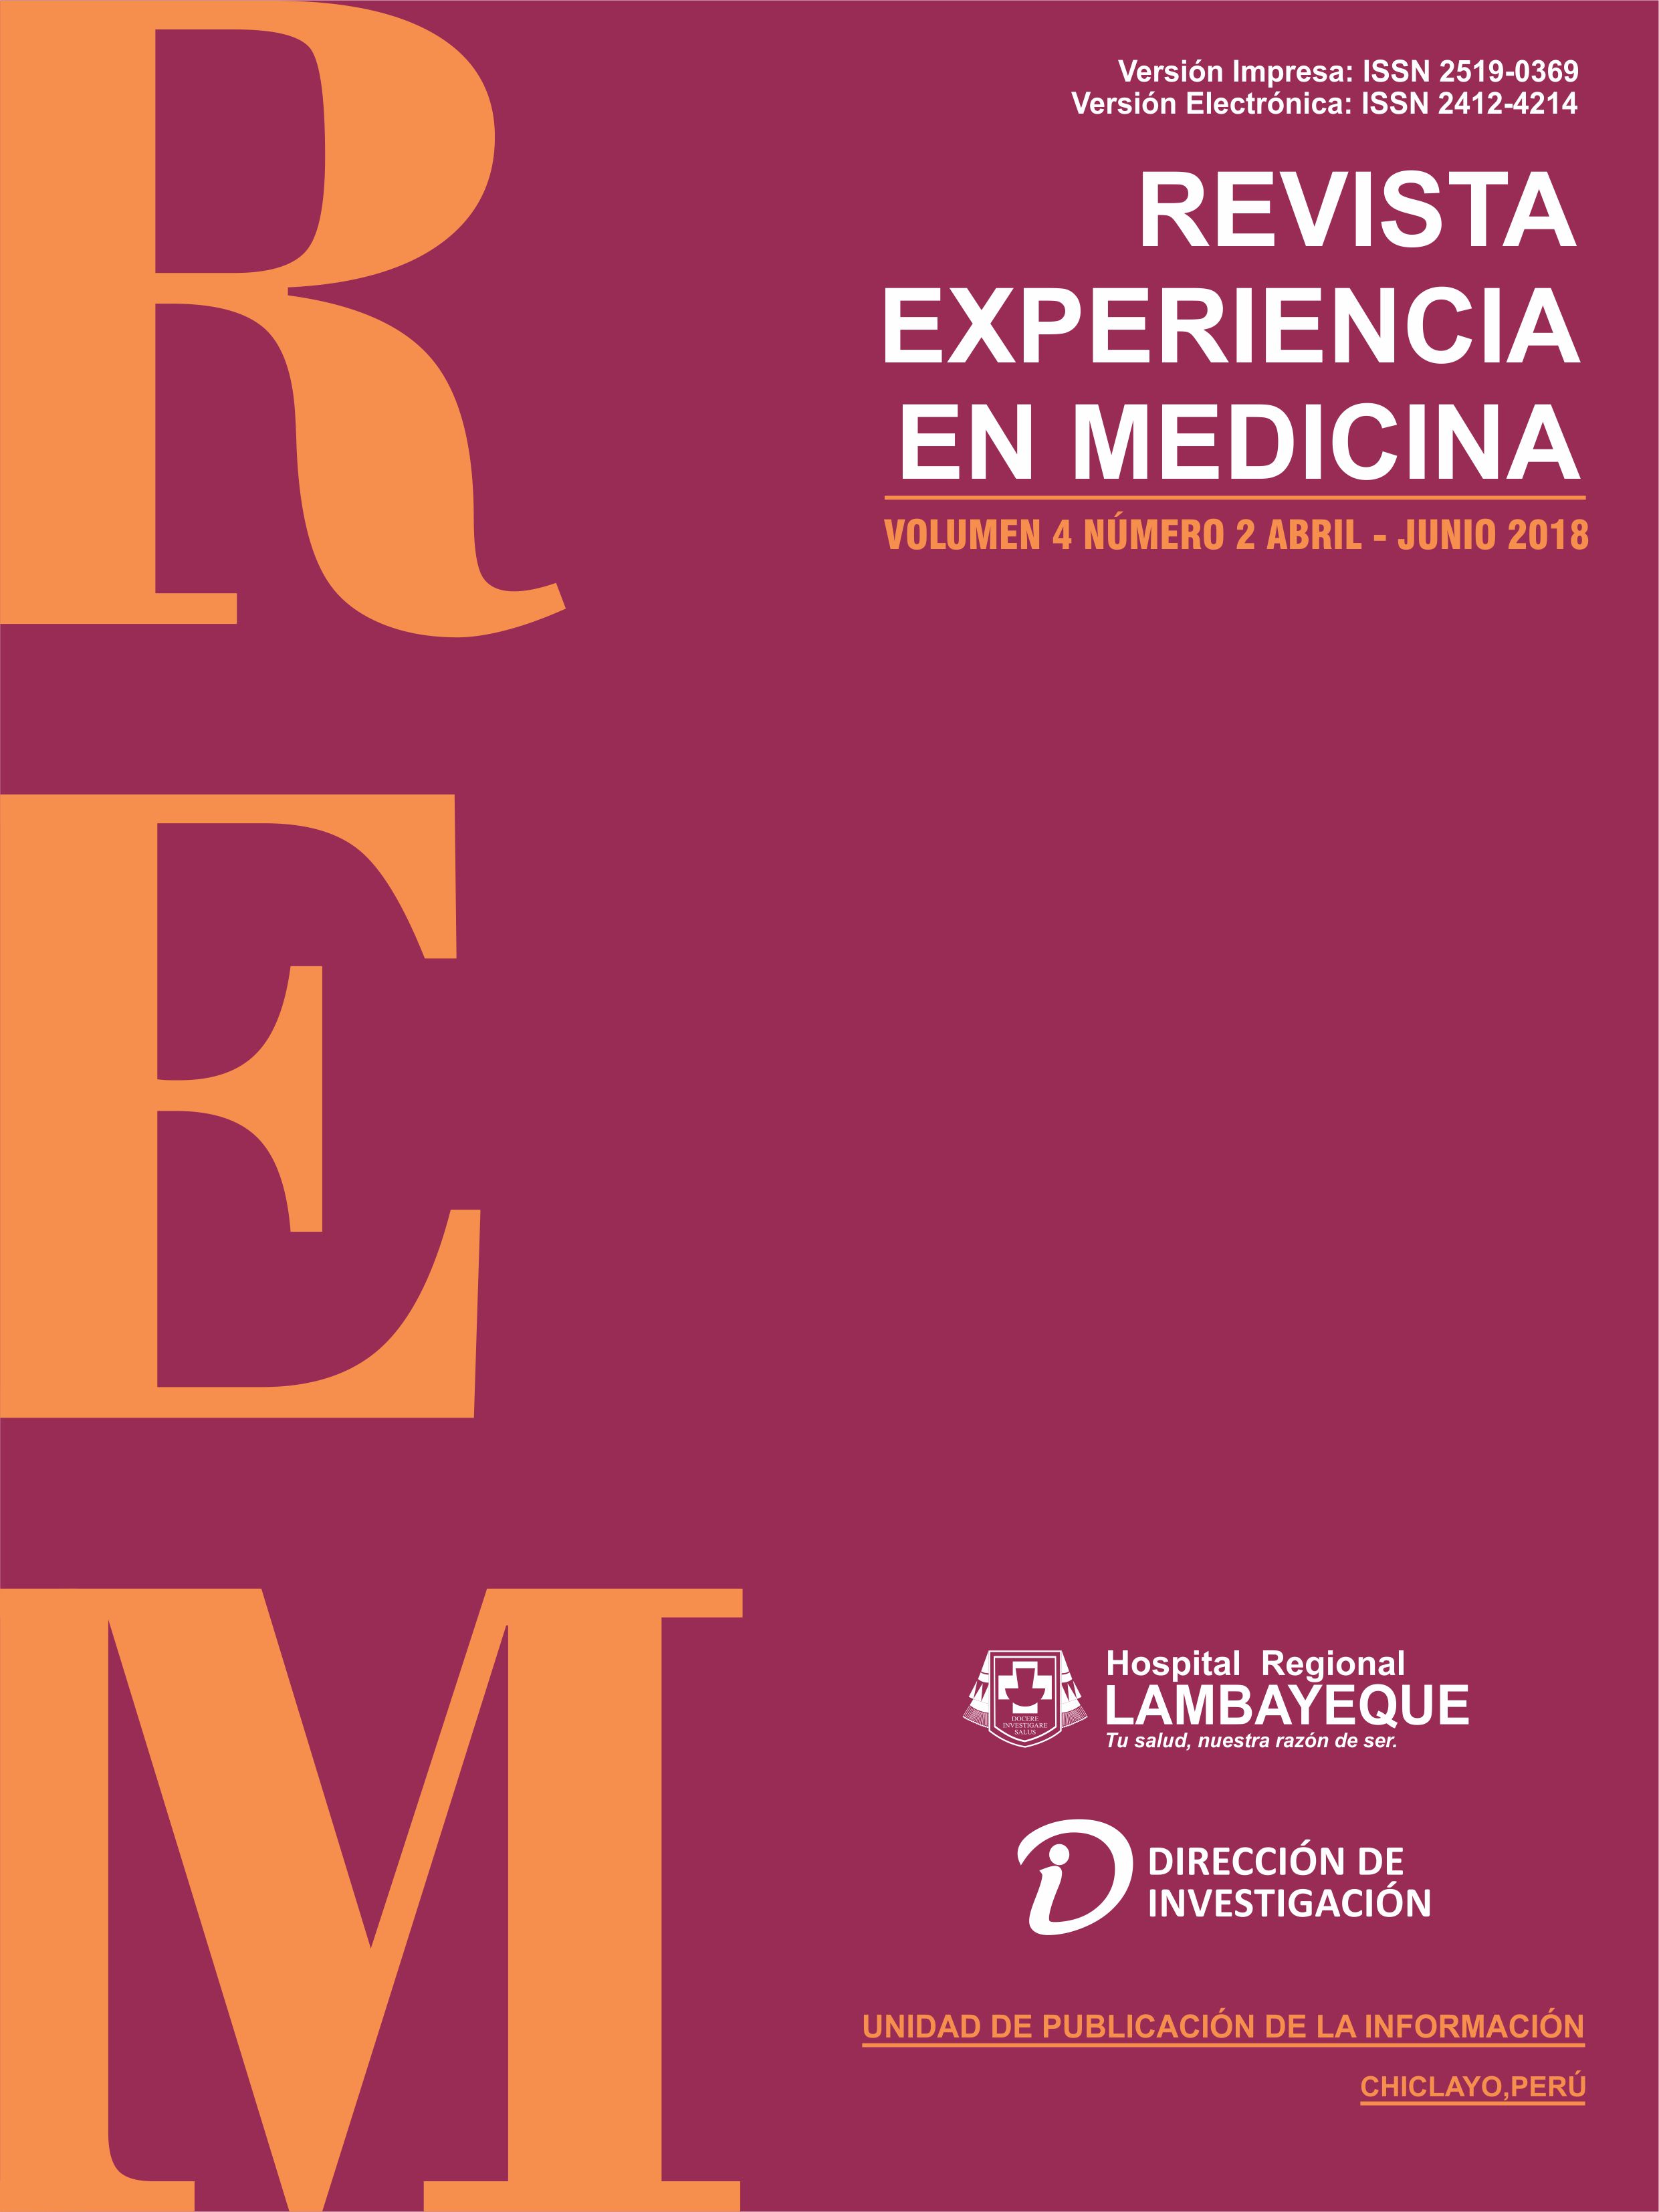 					Ver Vol. 4 Núm. 2 (2018): Revista Experiencia en Medicina - Hospital Regional Lambayeque
				